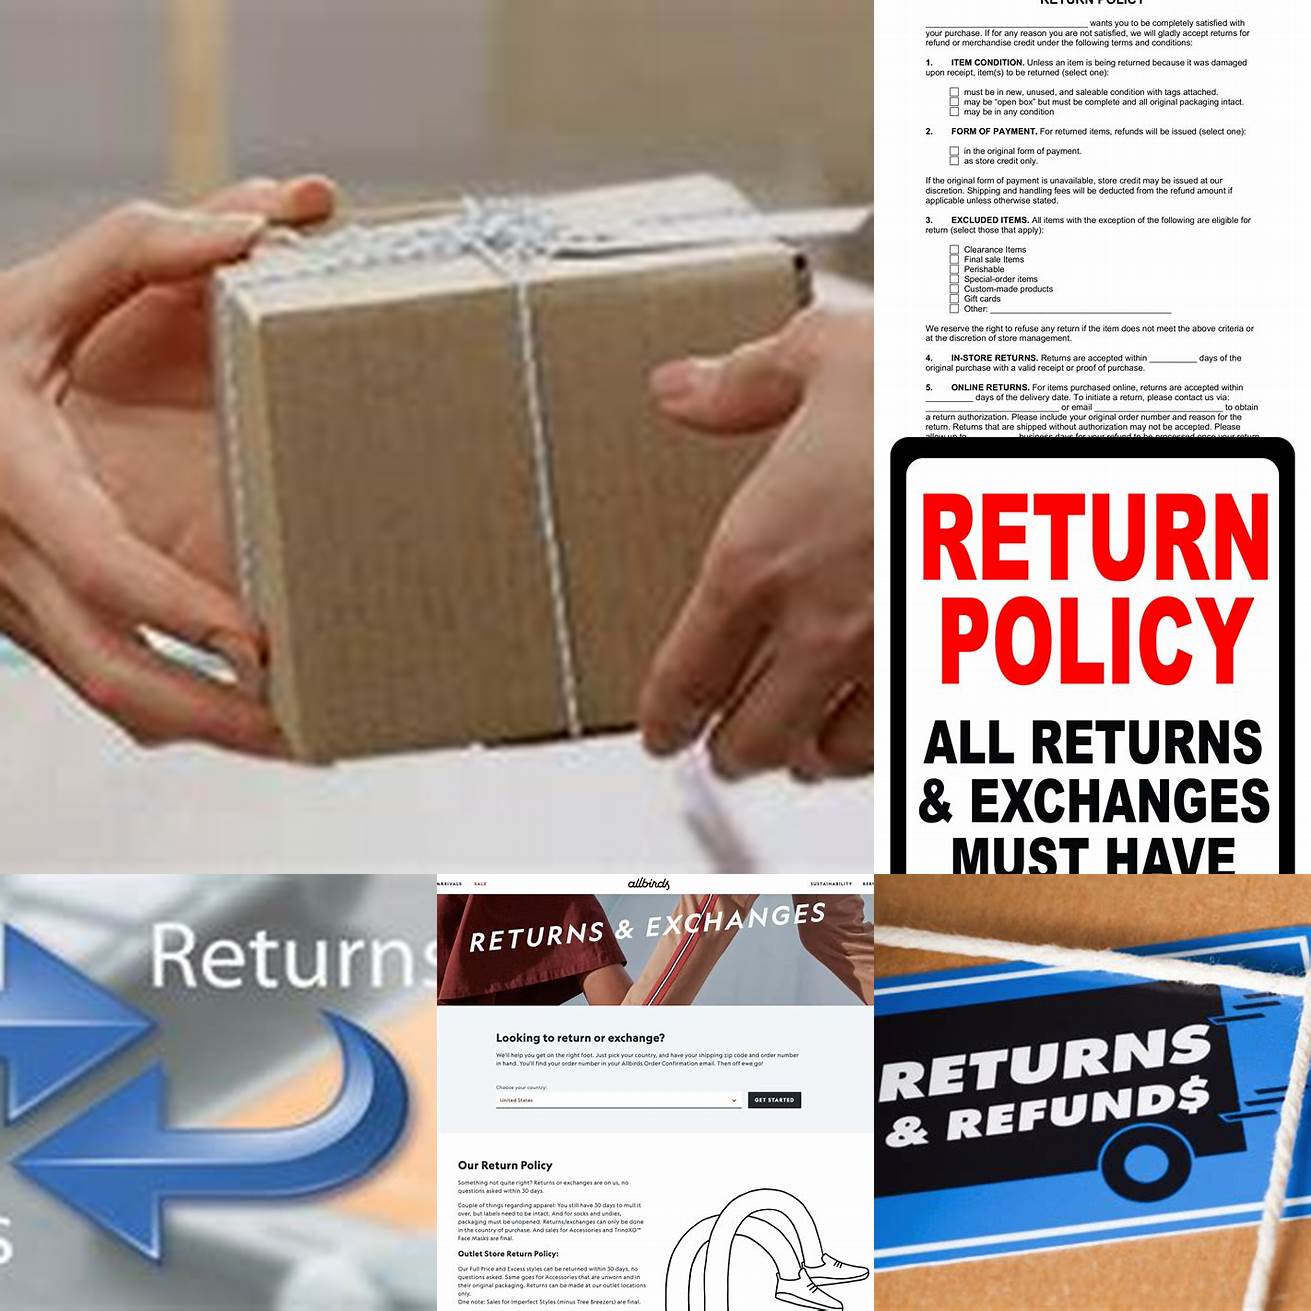 Return and exchange policies